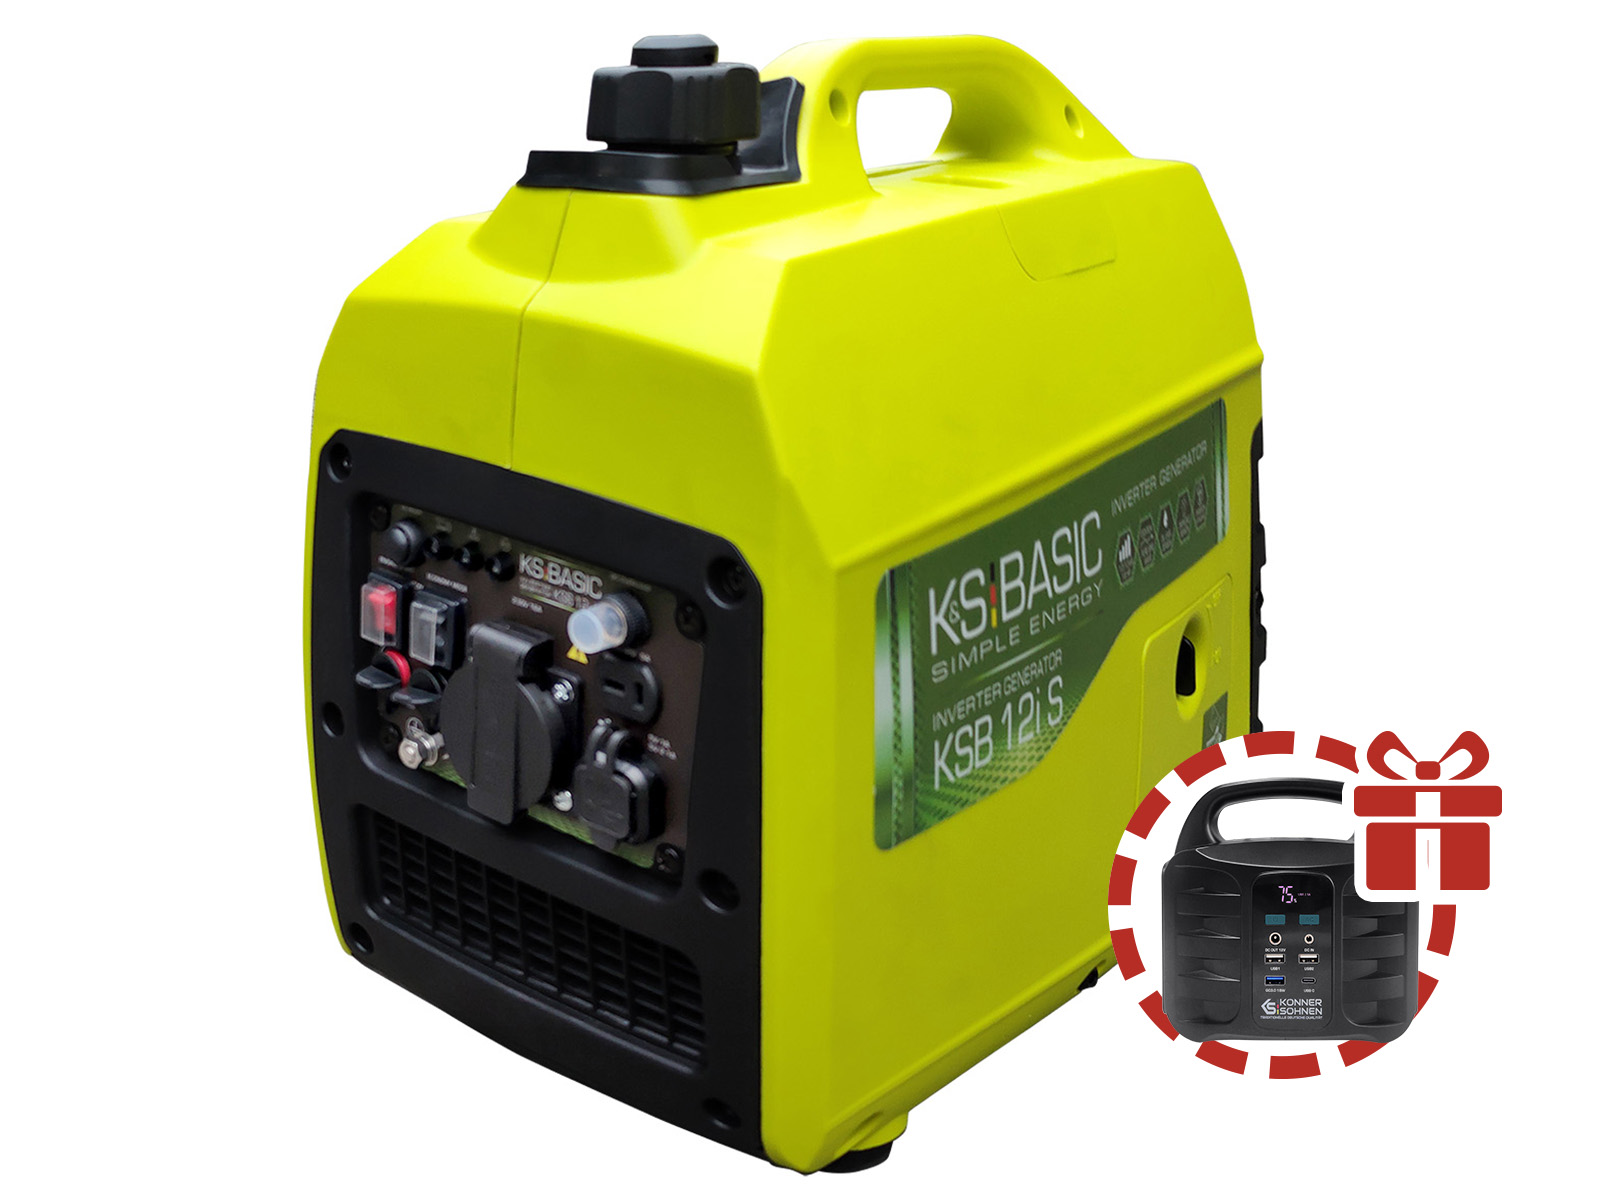 Inverter-Generator KSB 12i S